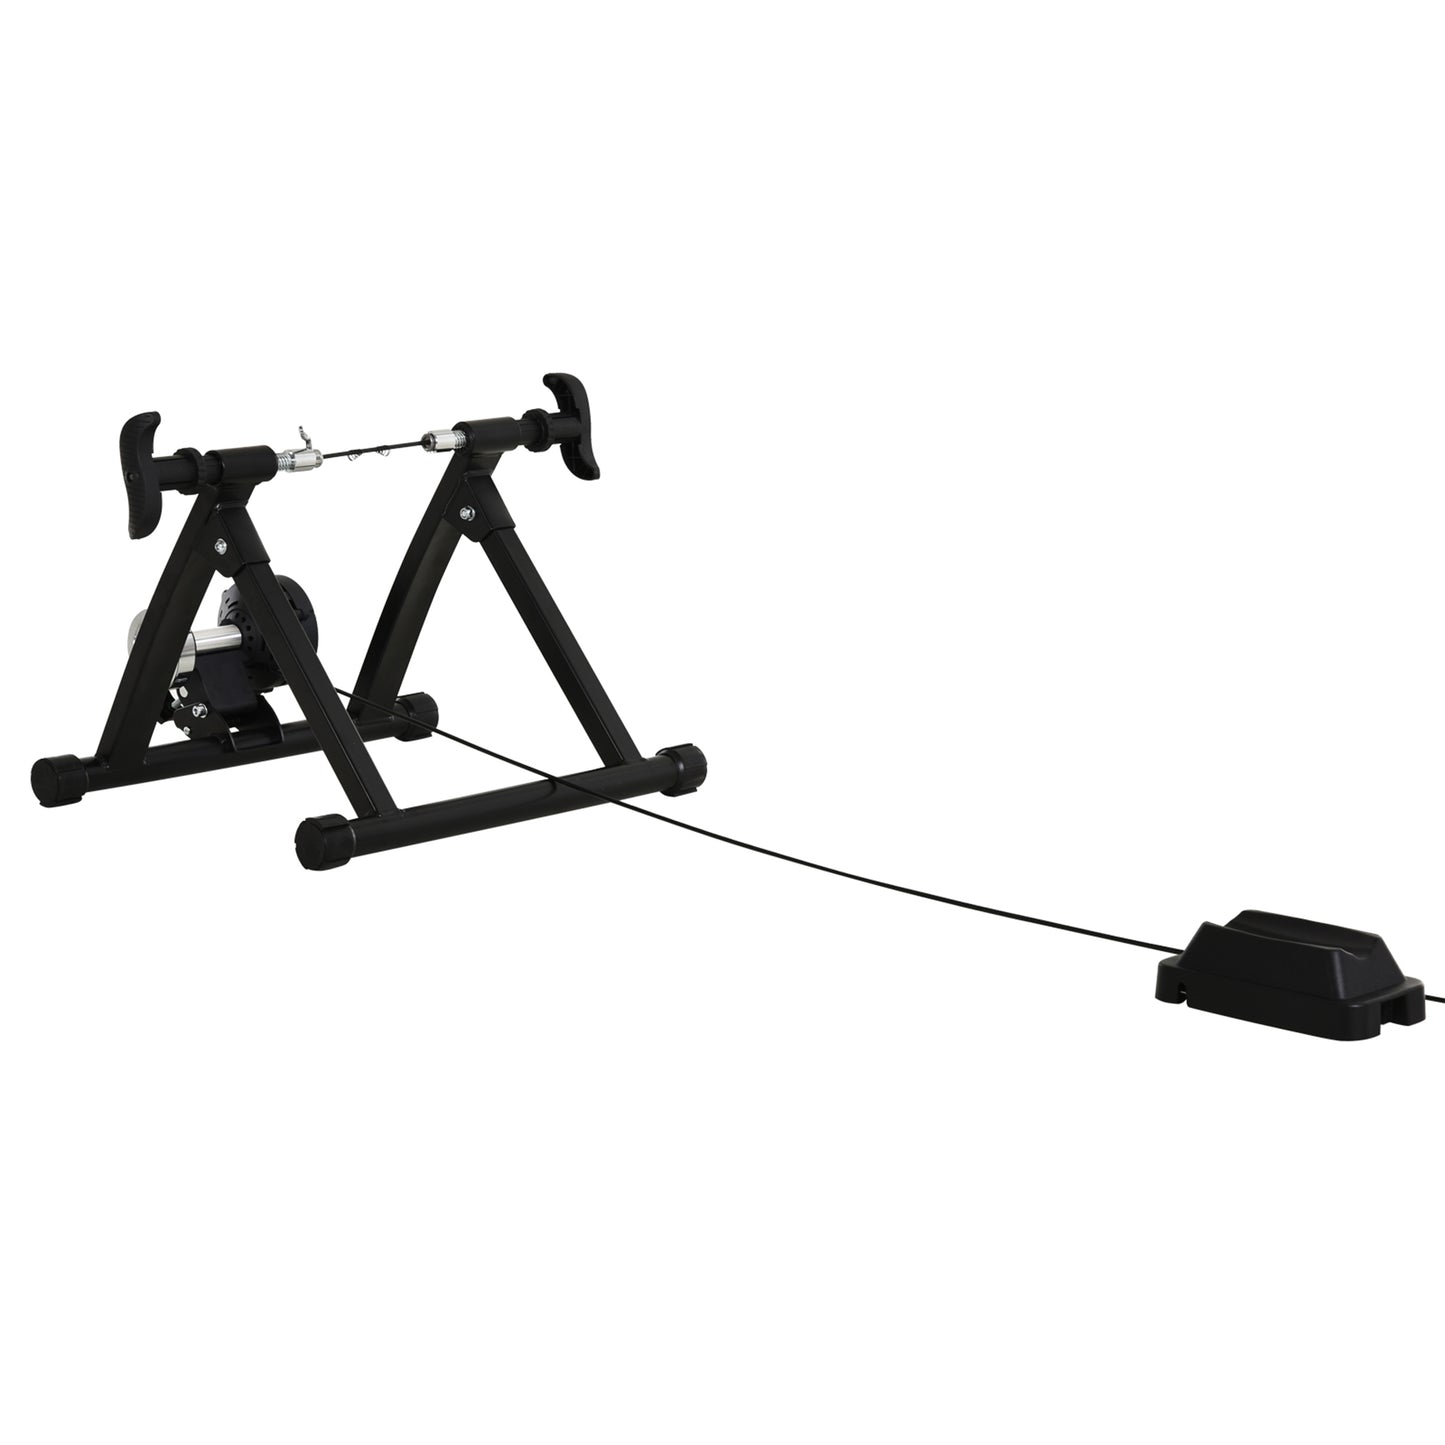 HOMCOM Magnetic Indoor Speed Bike Kinetic Trainer w/ 5 Level Resistance, Black